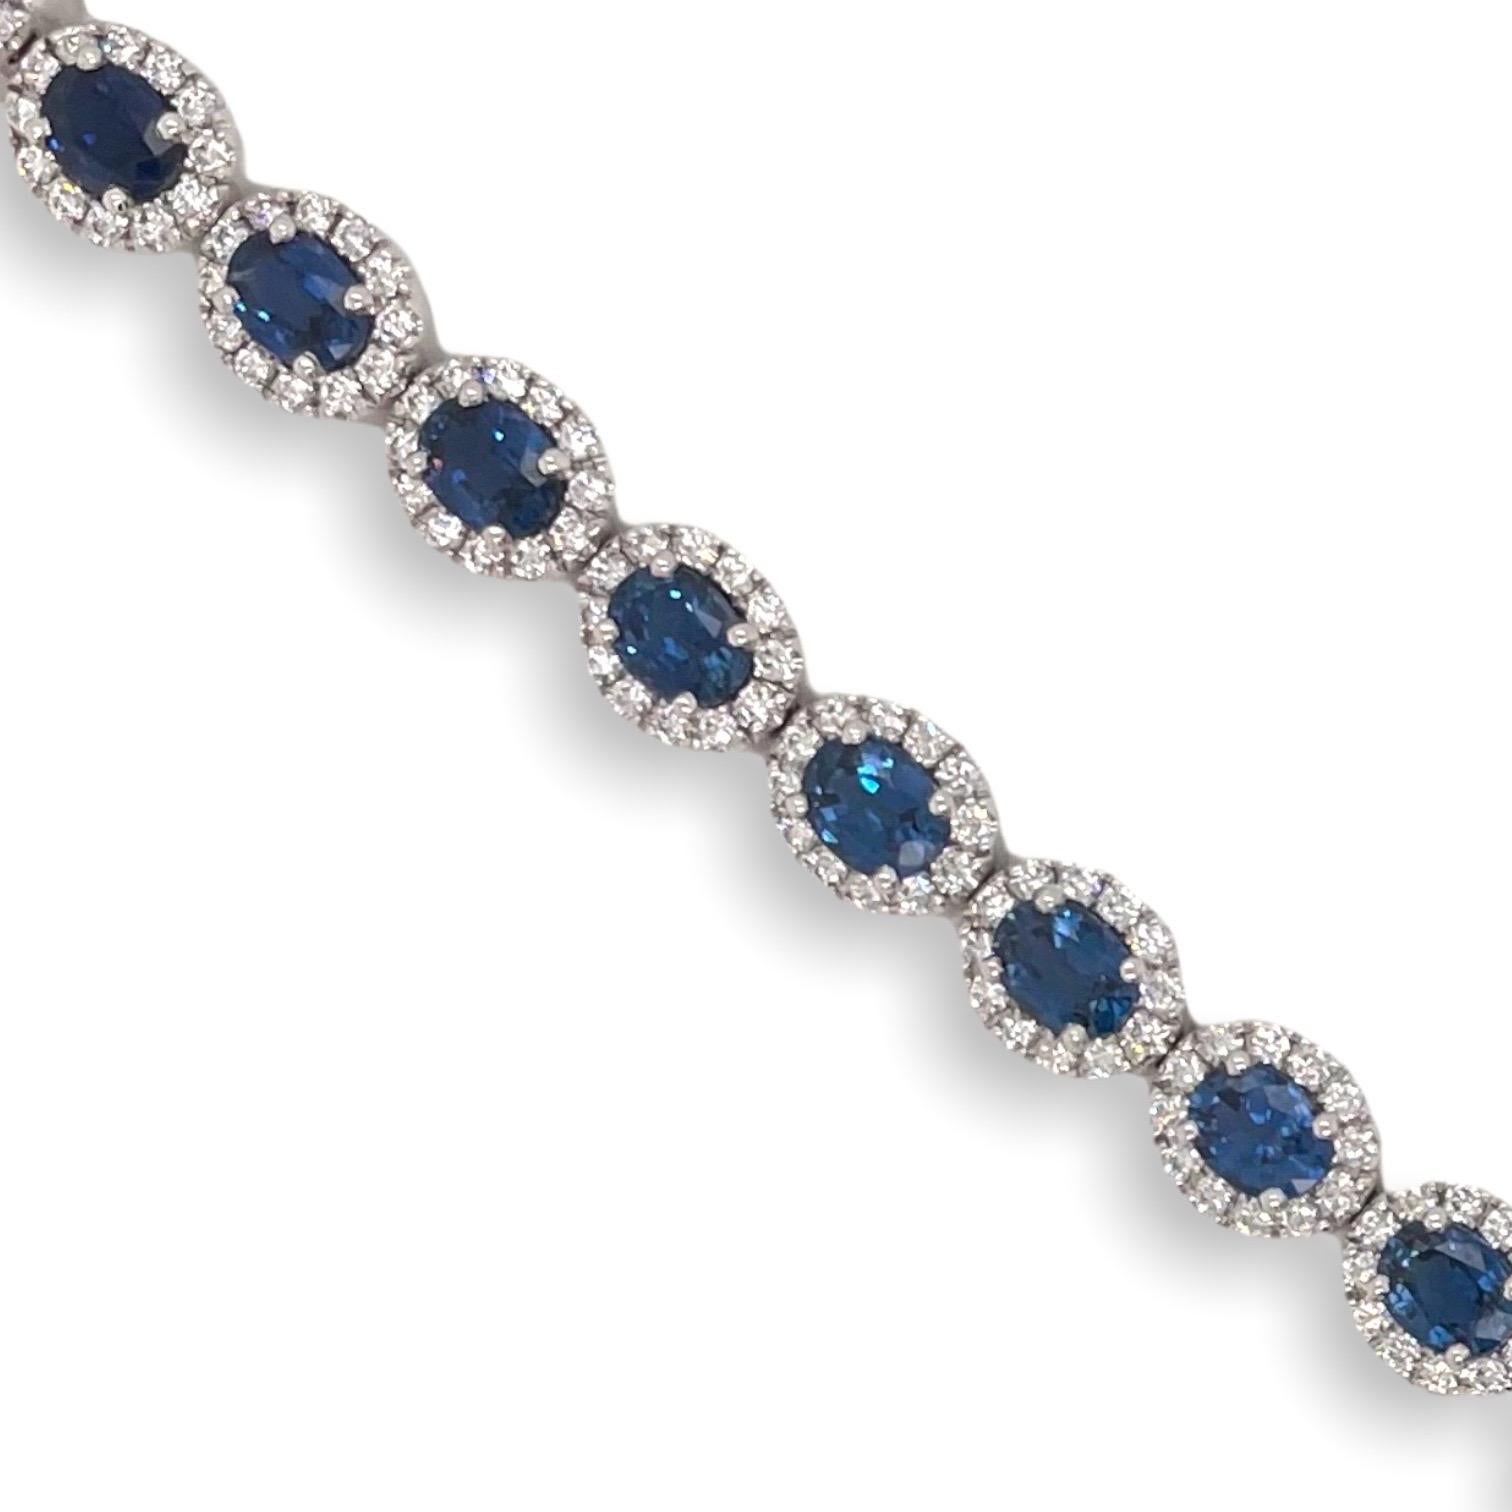 Contemporary Oval Sapphire & Diamond Halo Bracelet in 18K White Gold